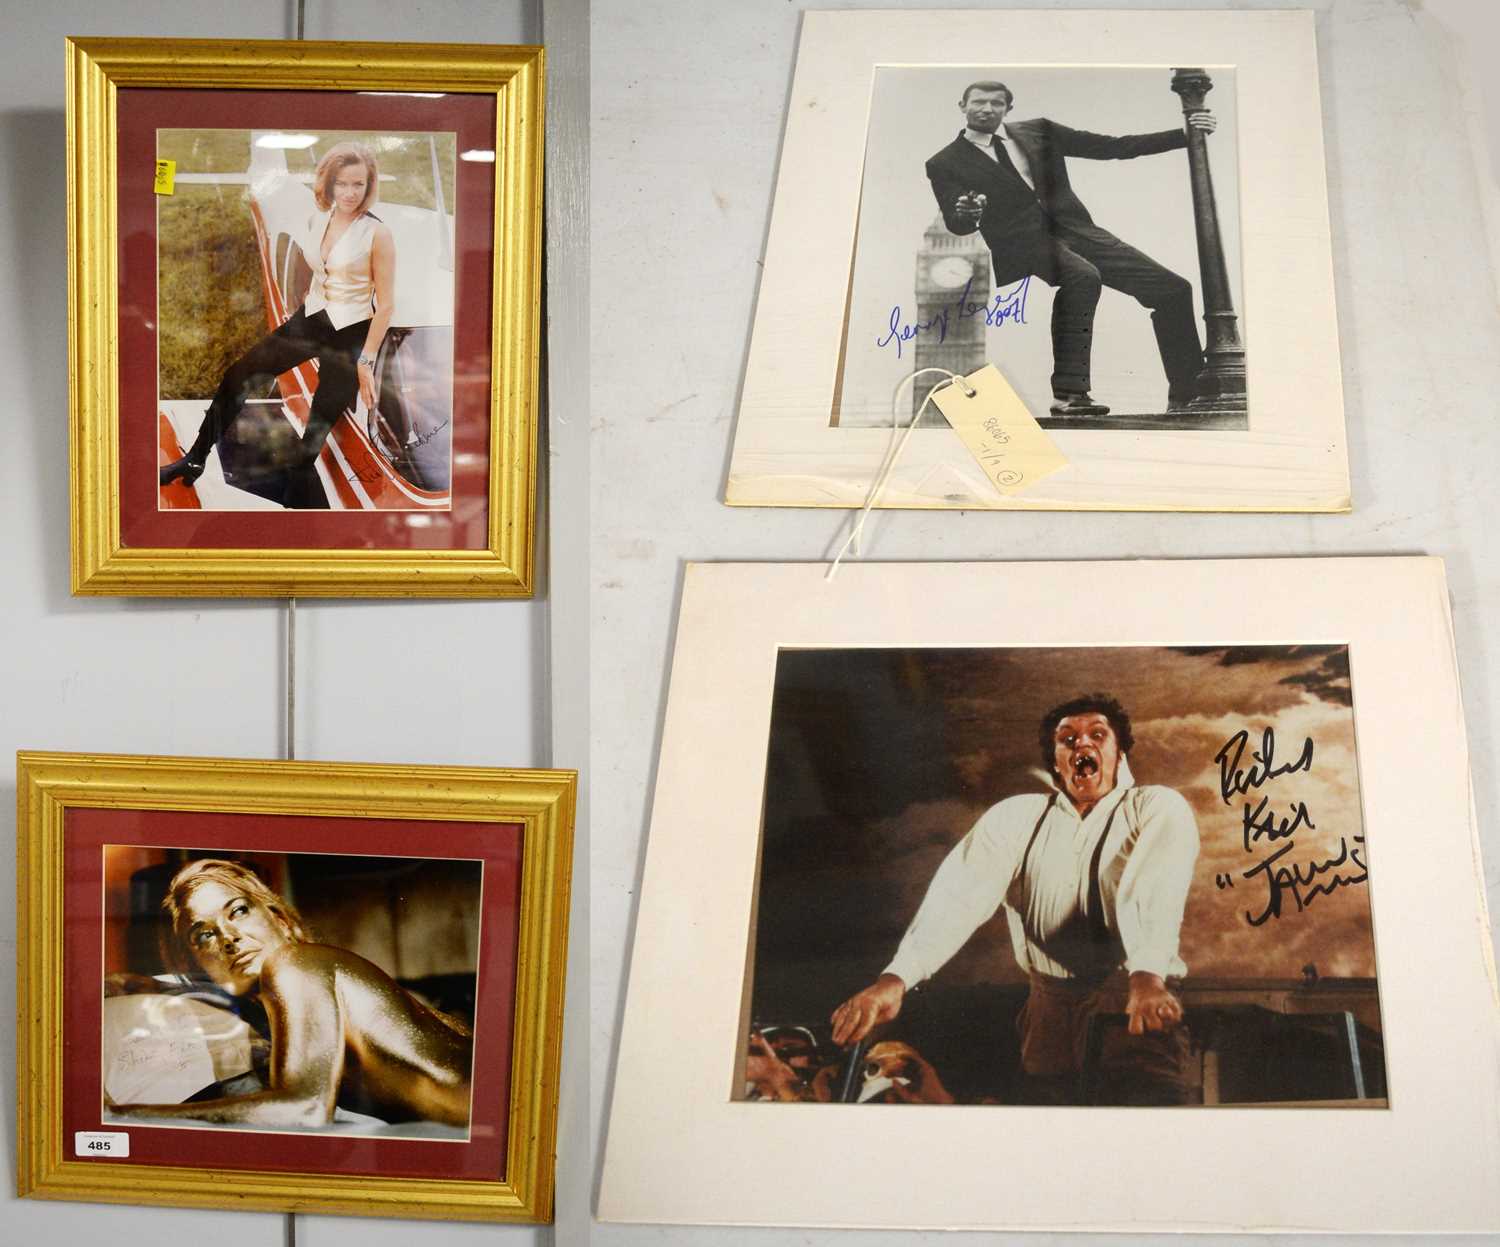 A collection of James Bond interest autographed photos.